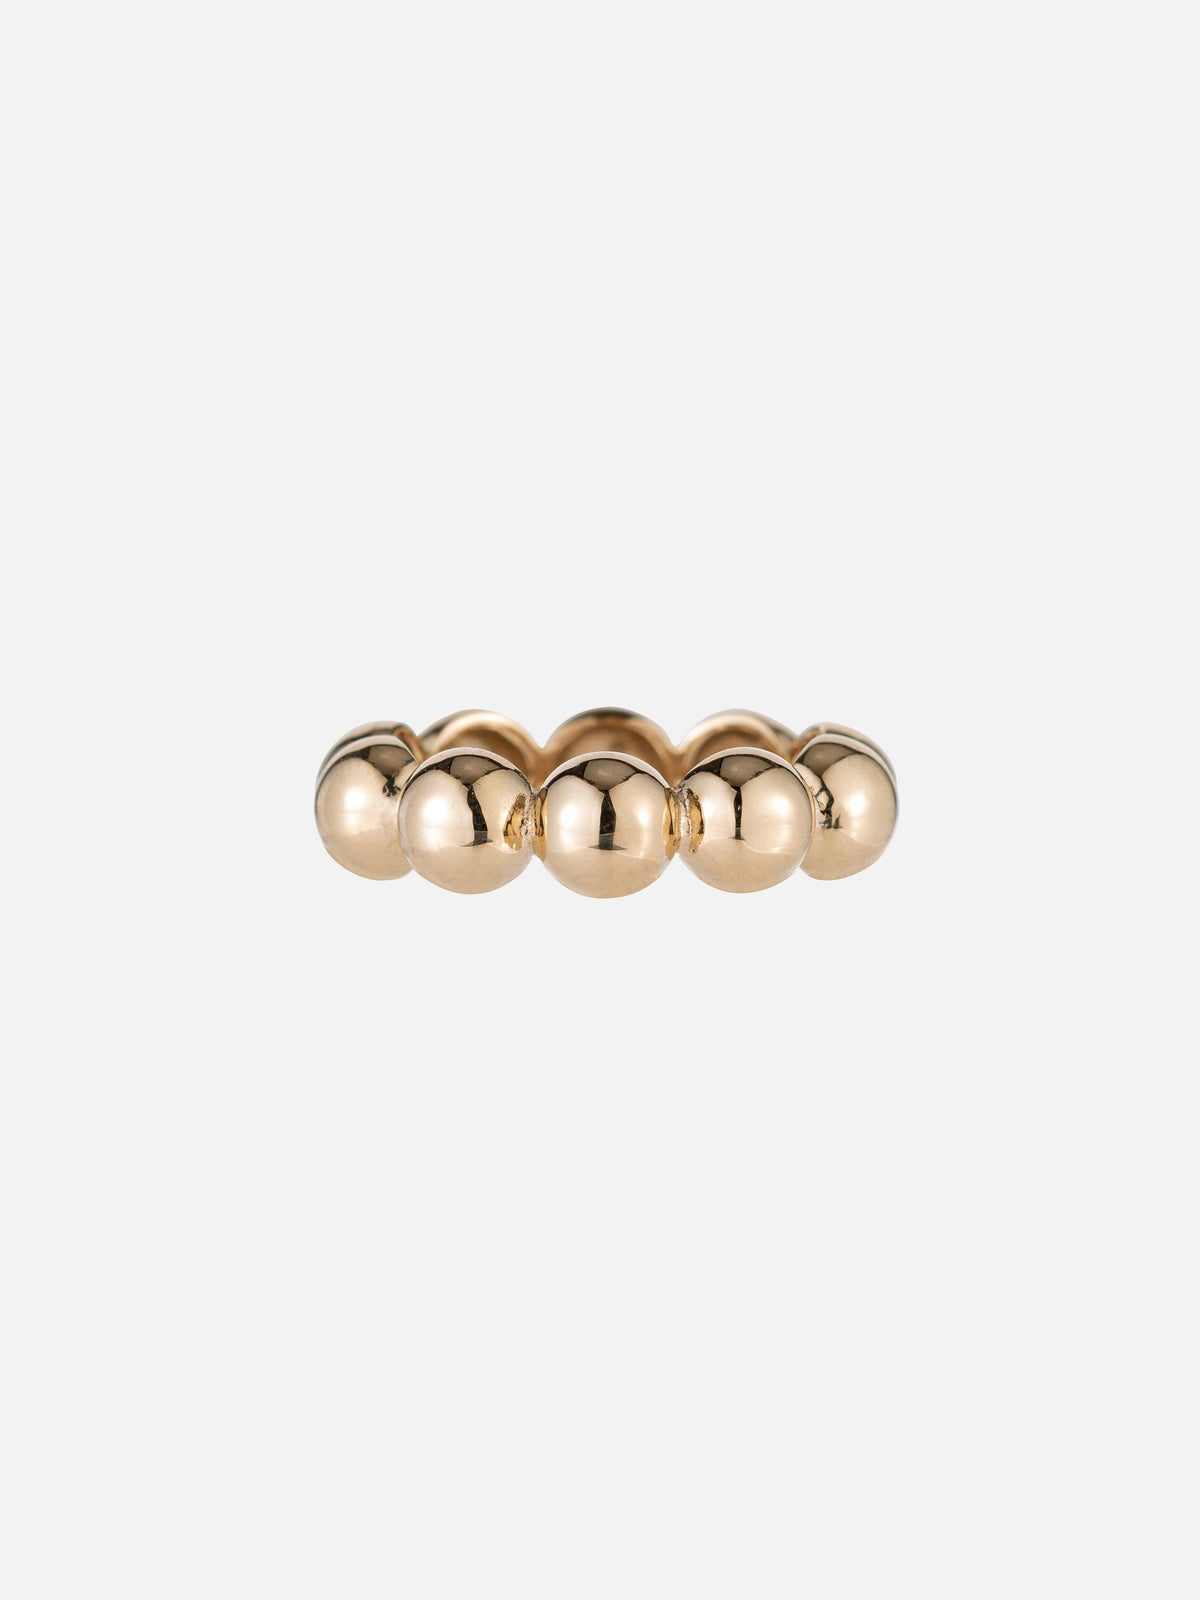 Standard Bubble Ring - Ariel Gordon Jewelry - At Present